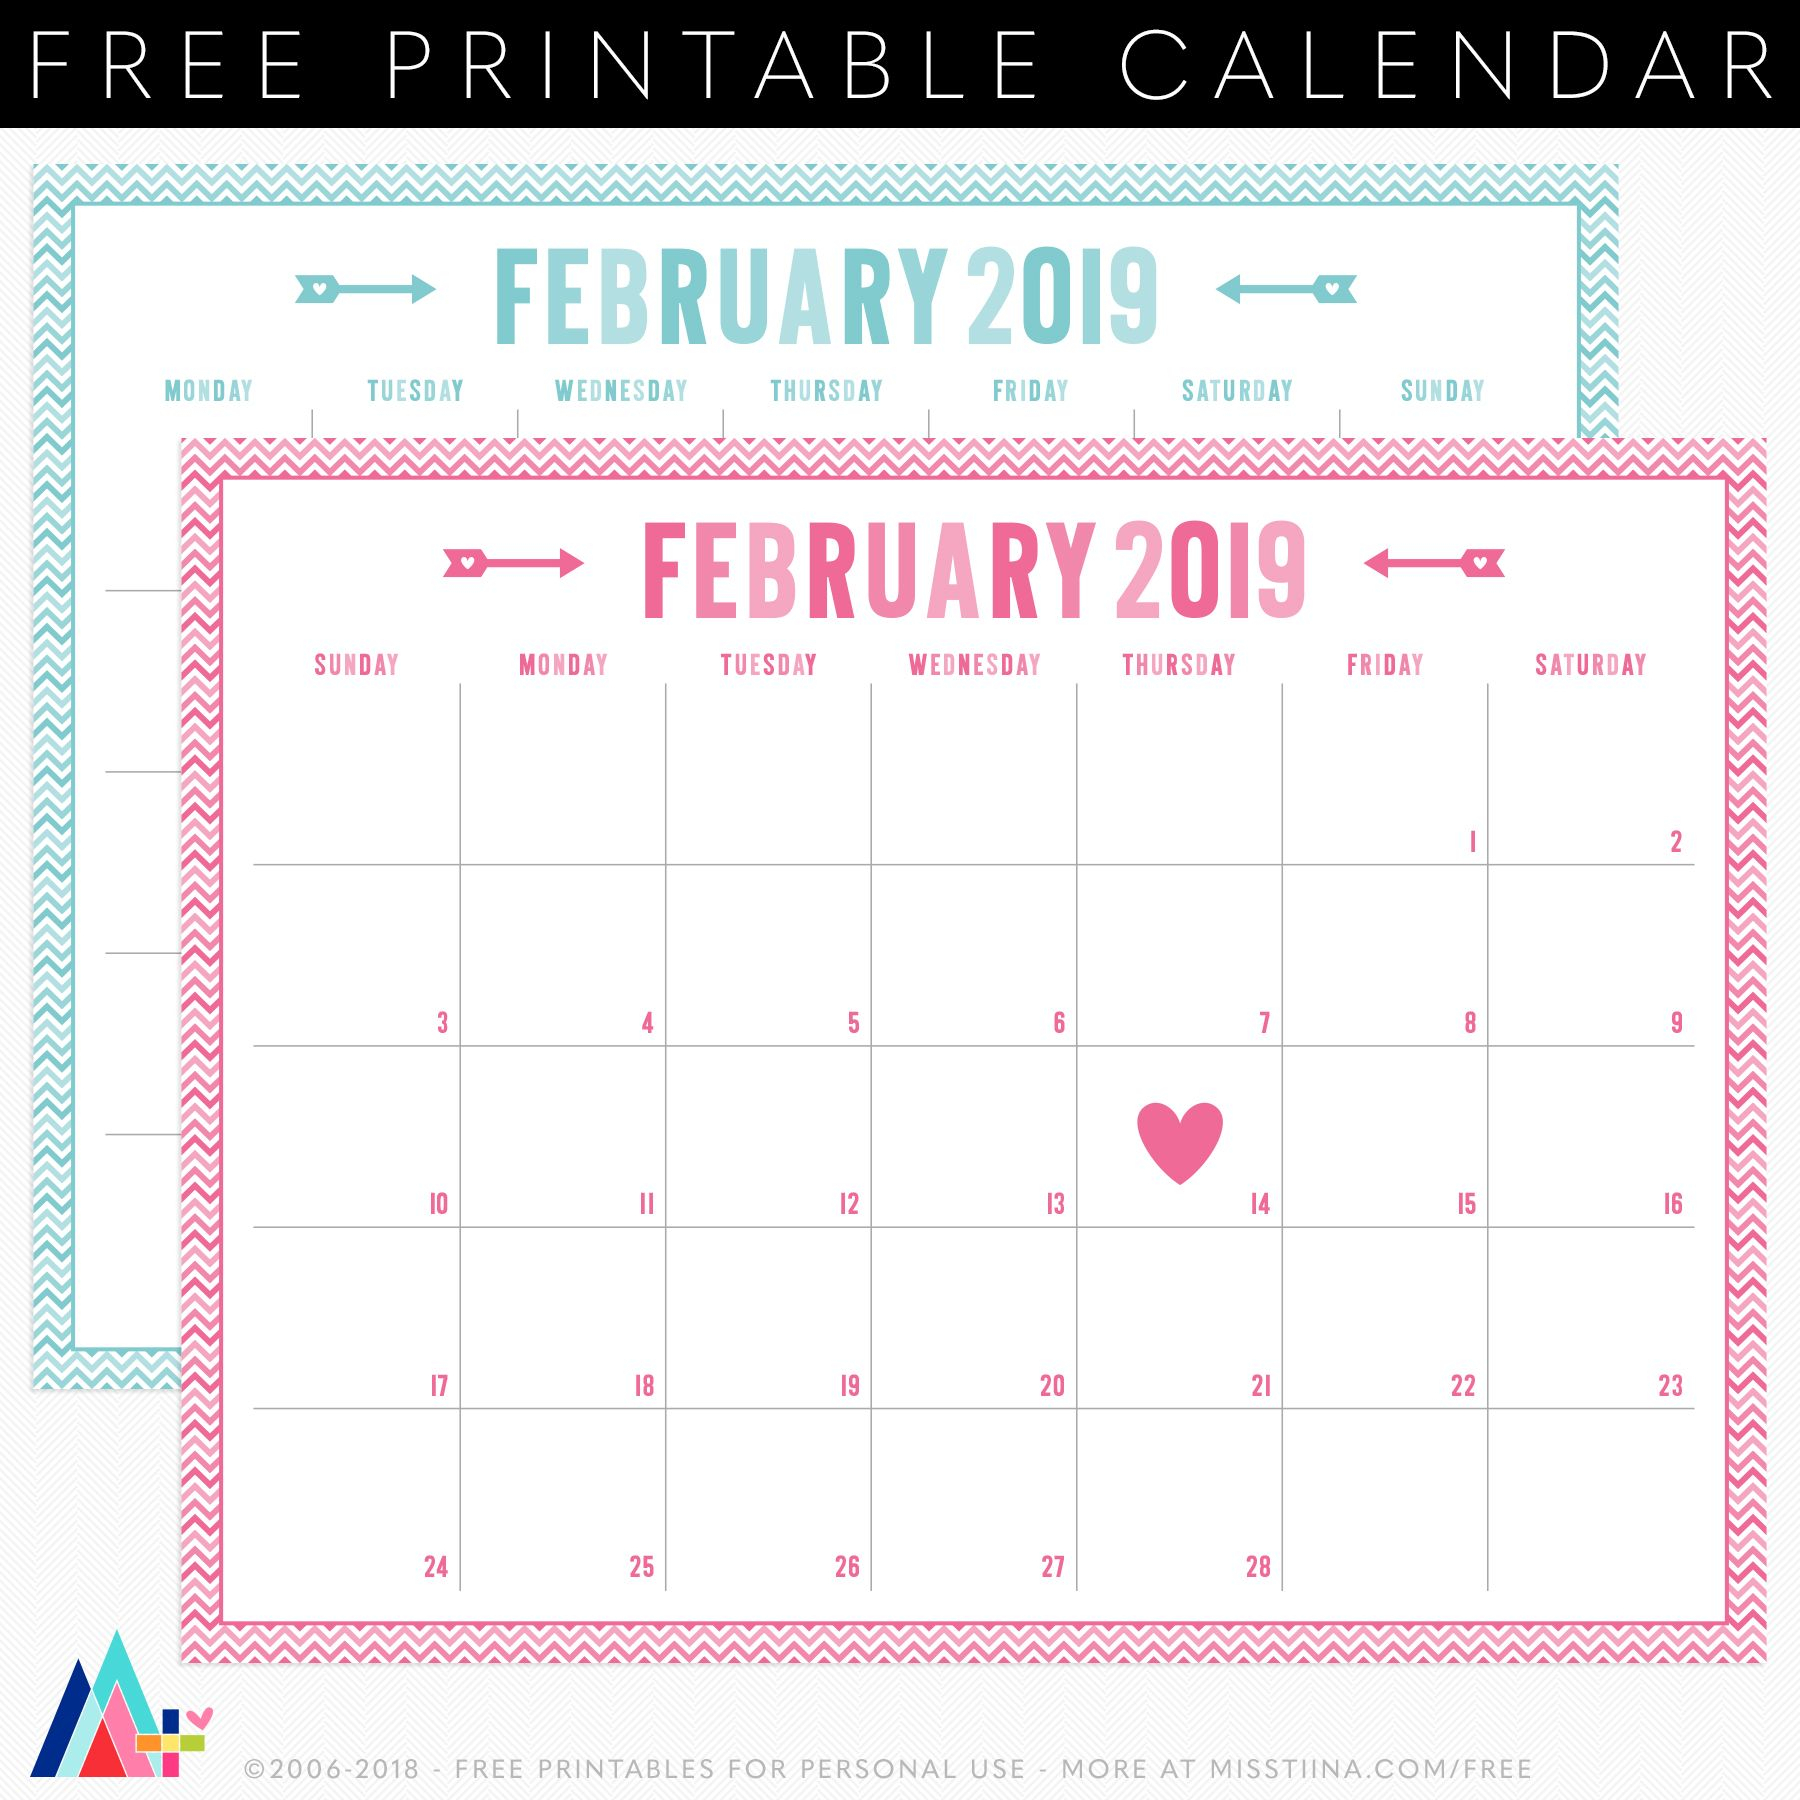 Free Printable Valentine Calendars Calendar Printables Free Templates